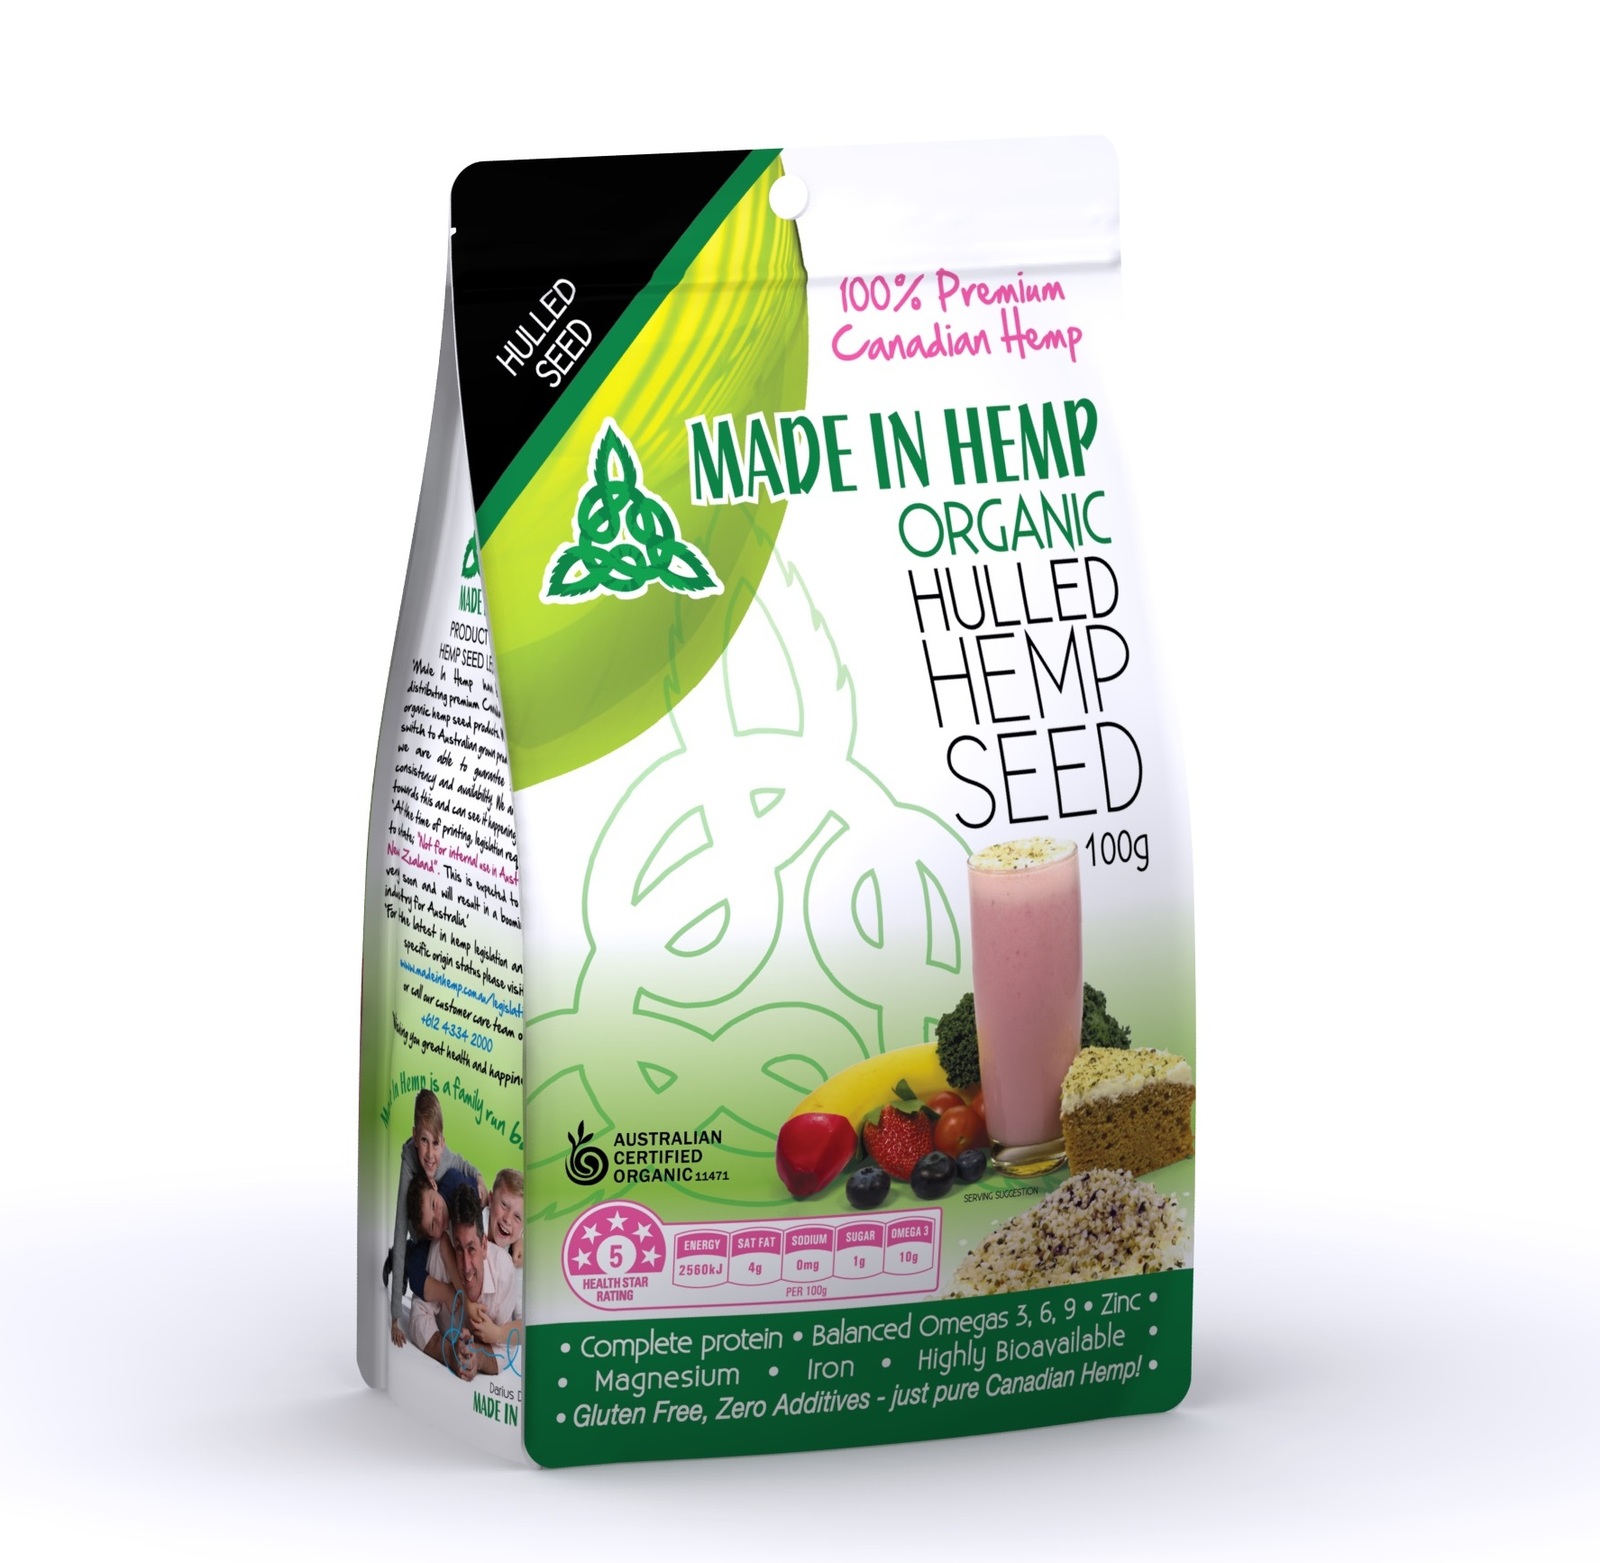 Certified Organic  Hulled Hemp Seed  - 100g